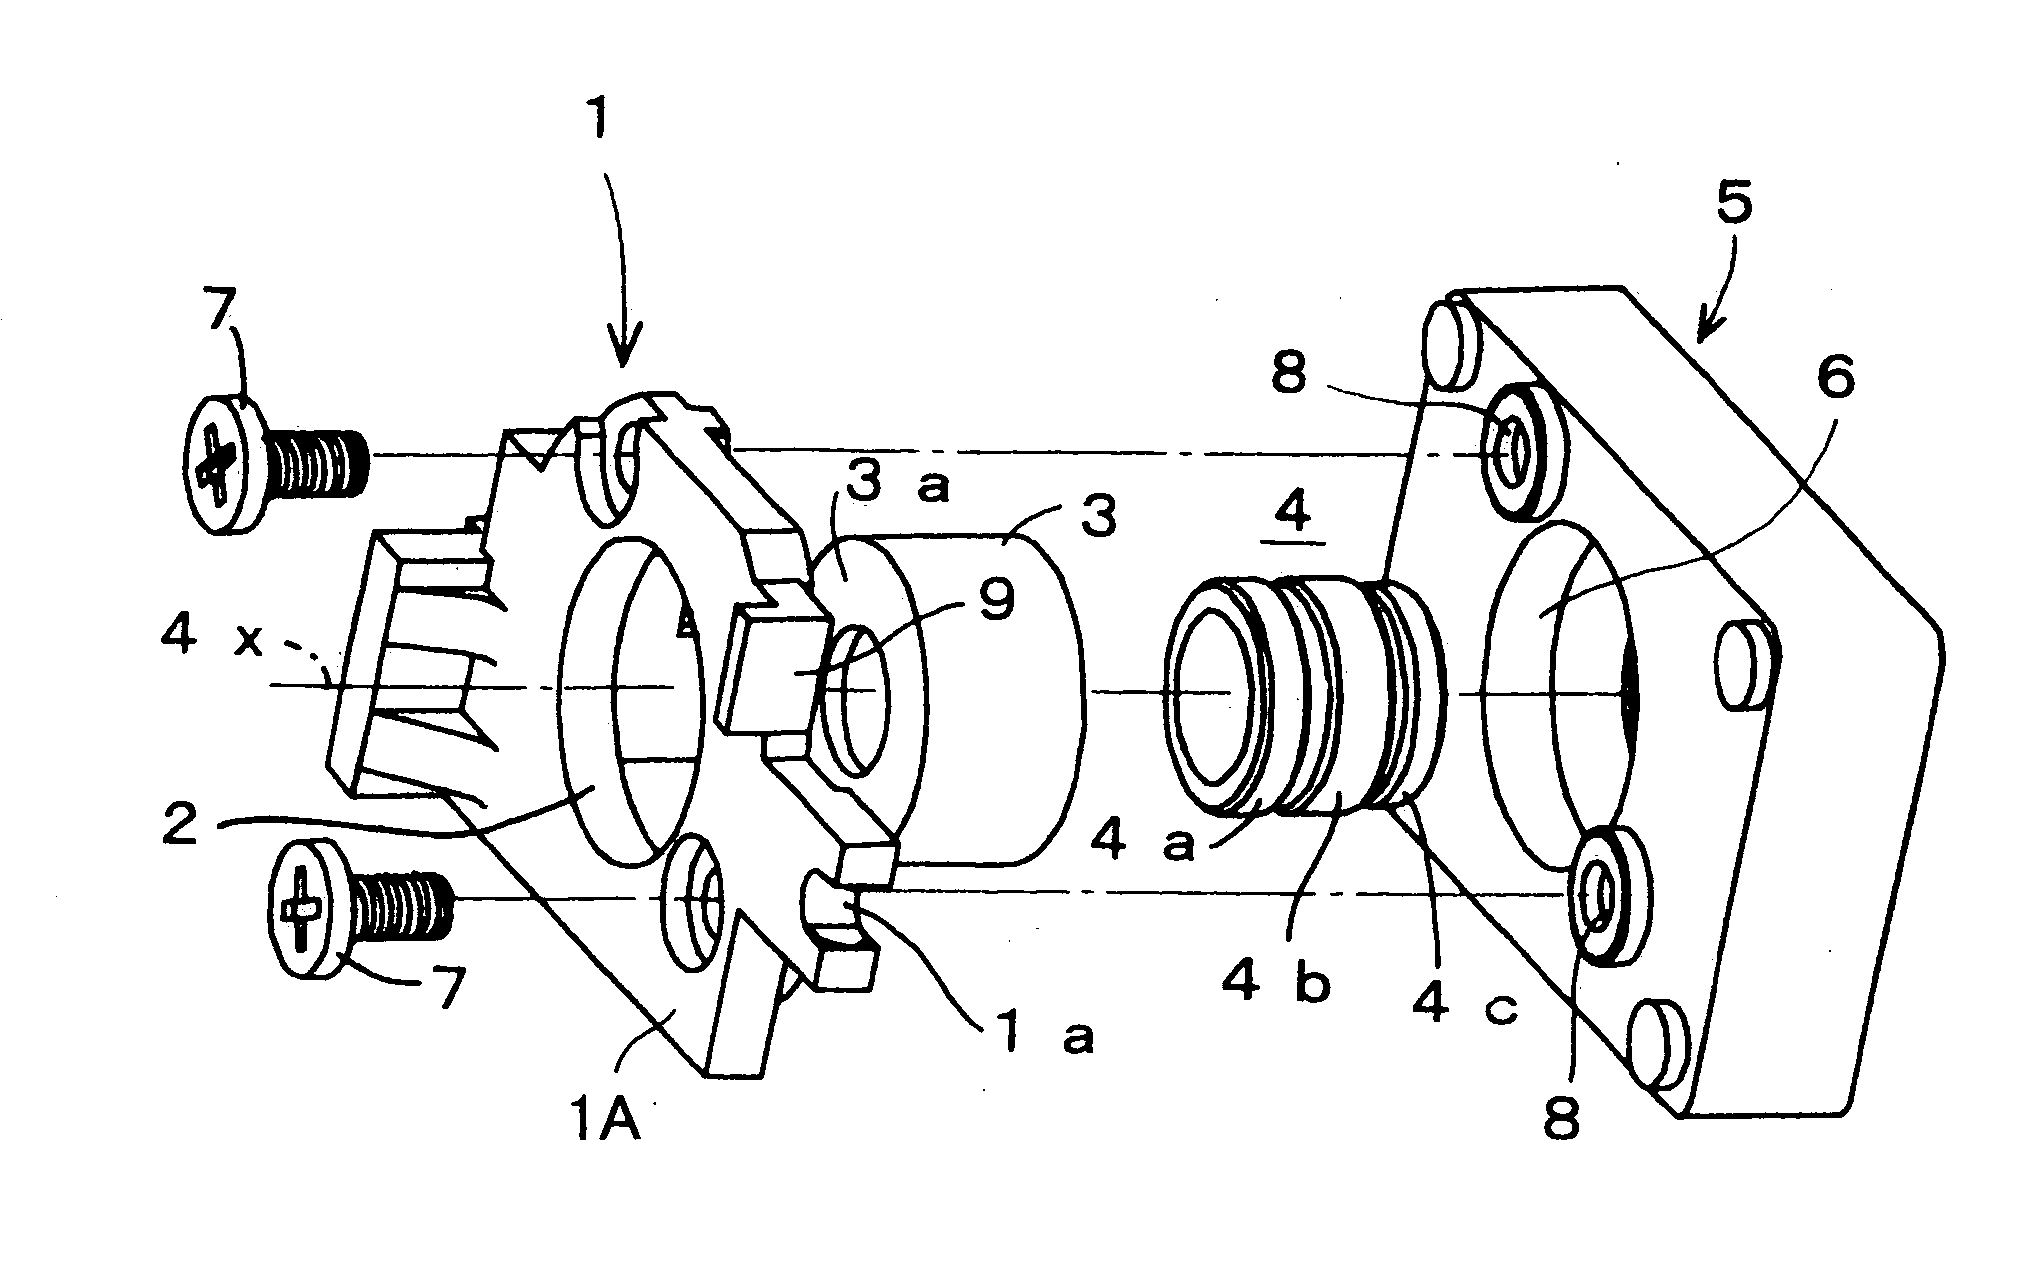 Lens-shutter coupling unit